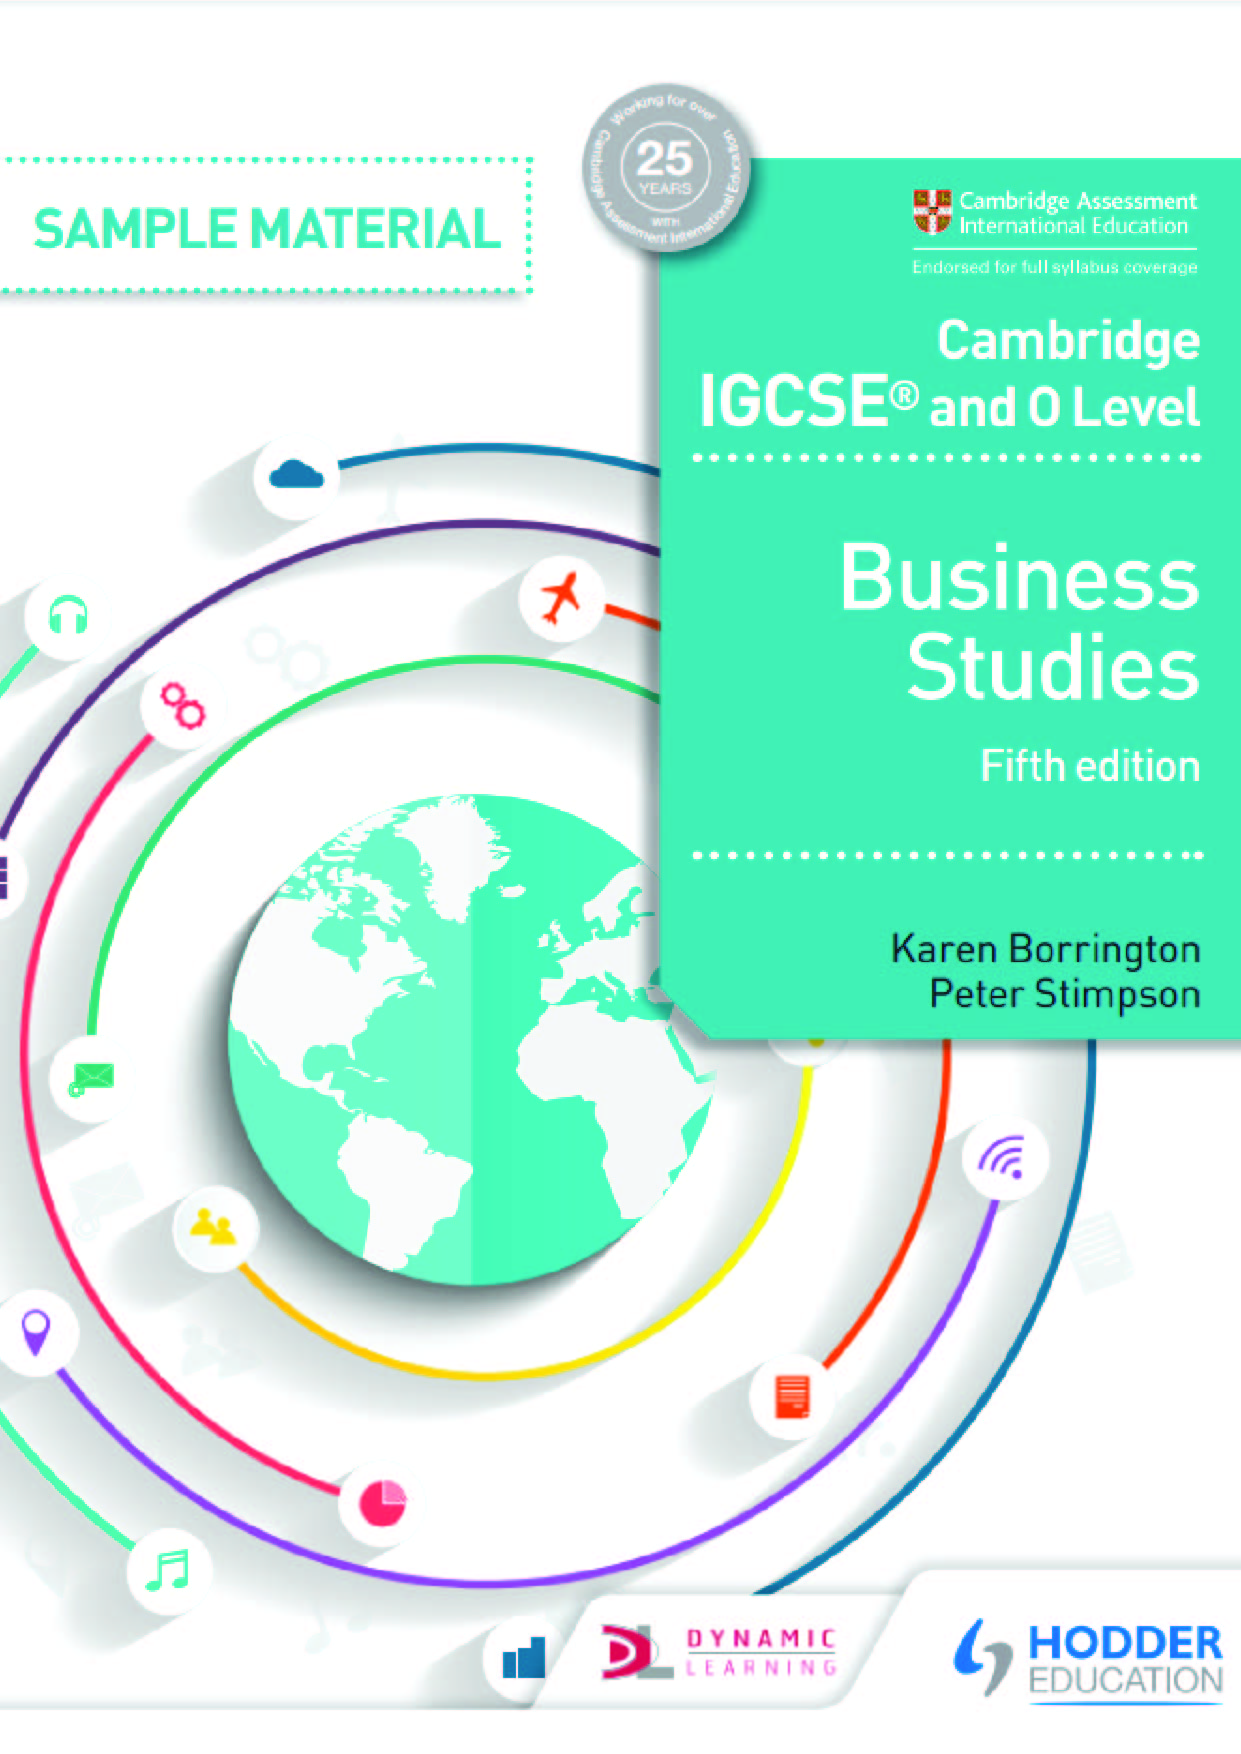 Business Studies Cambridge Assessment International Education